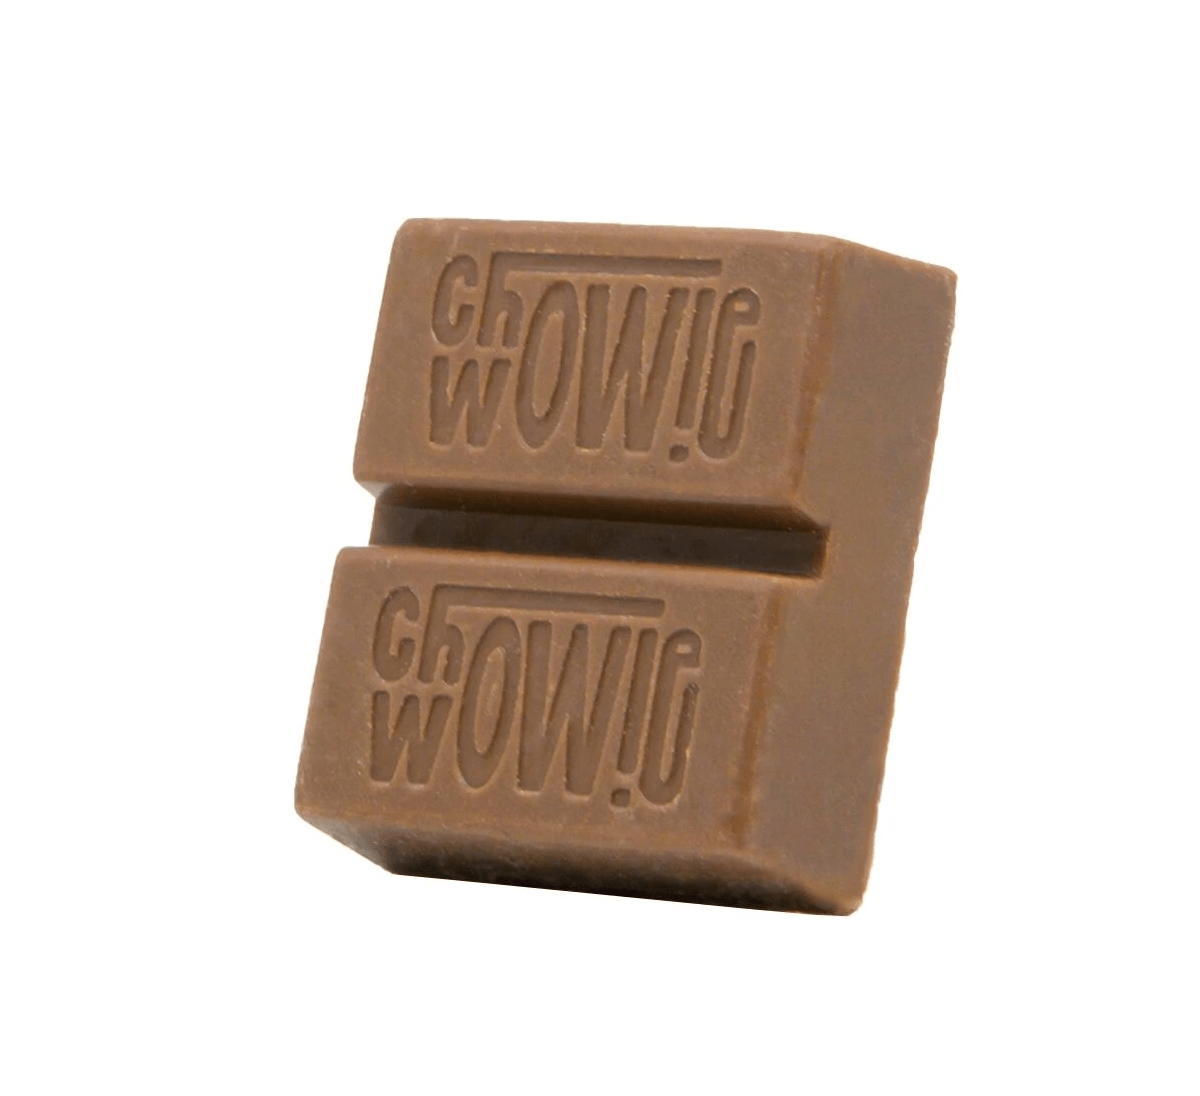 Chowie Wowie Each 1:1 Balance Chocolates